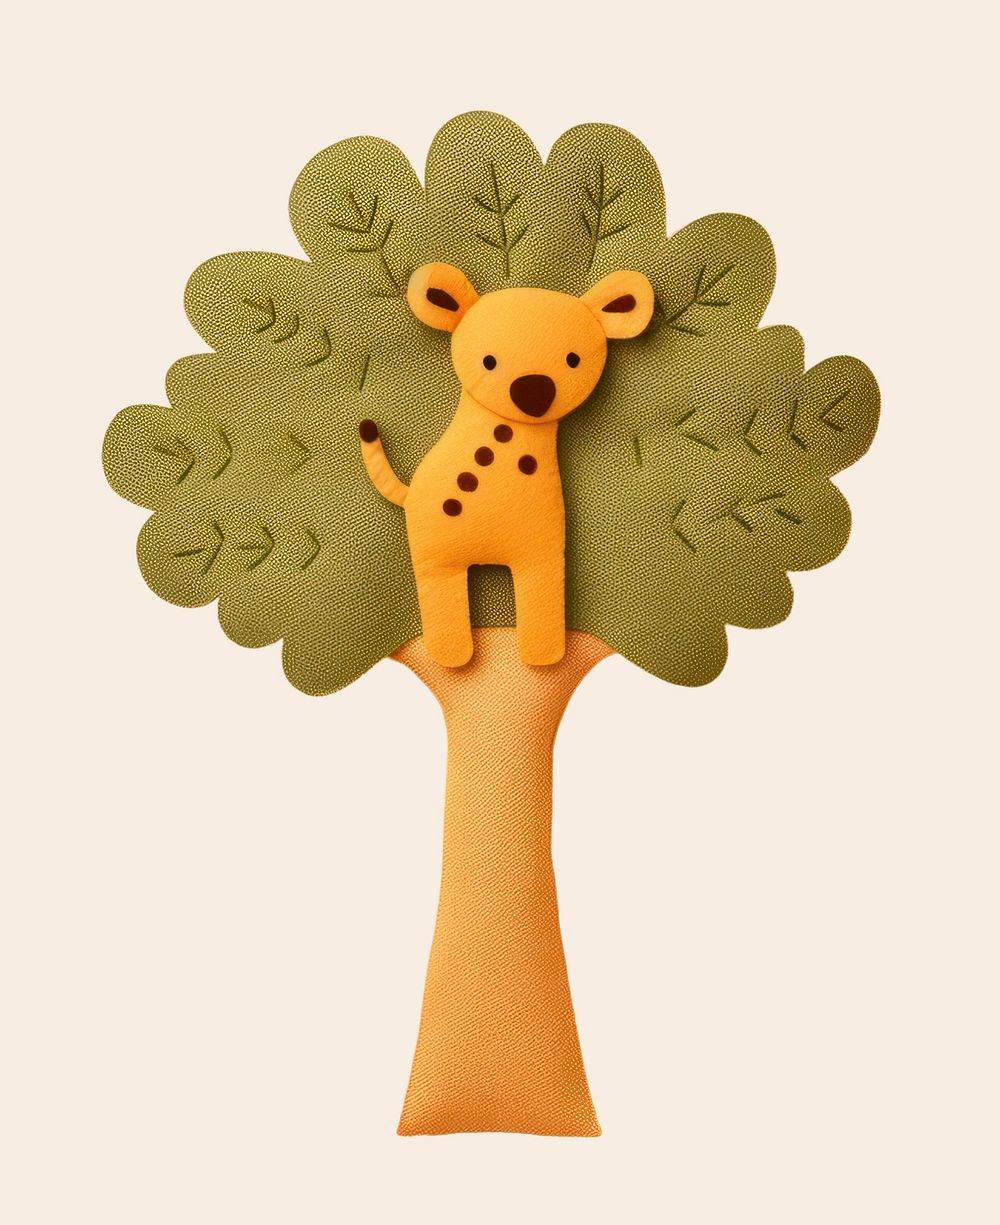 Toy savanna cartoon tree. AI generated Image by rawpixel.